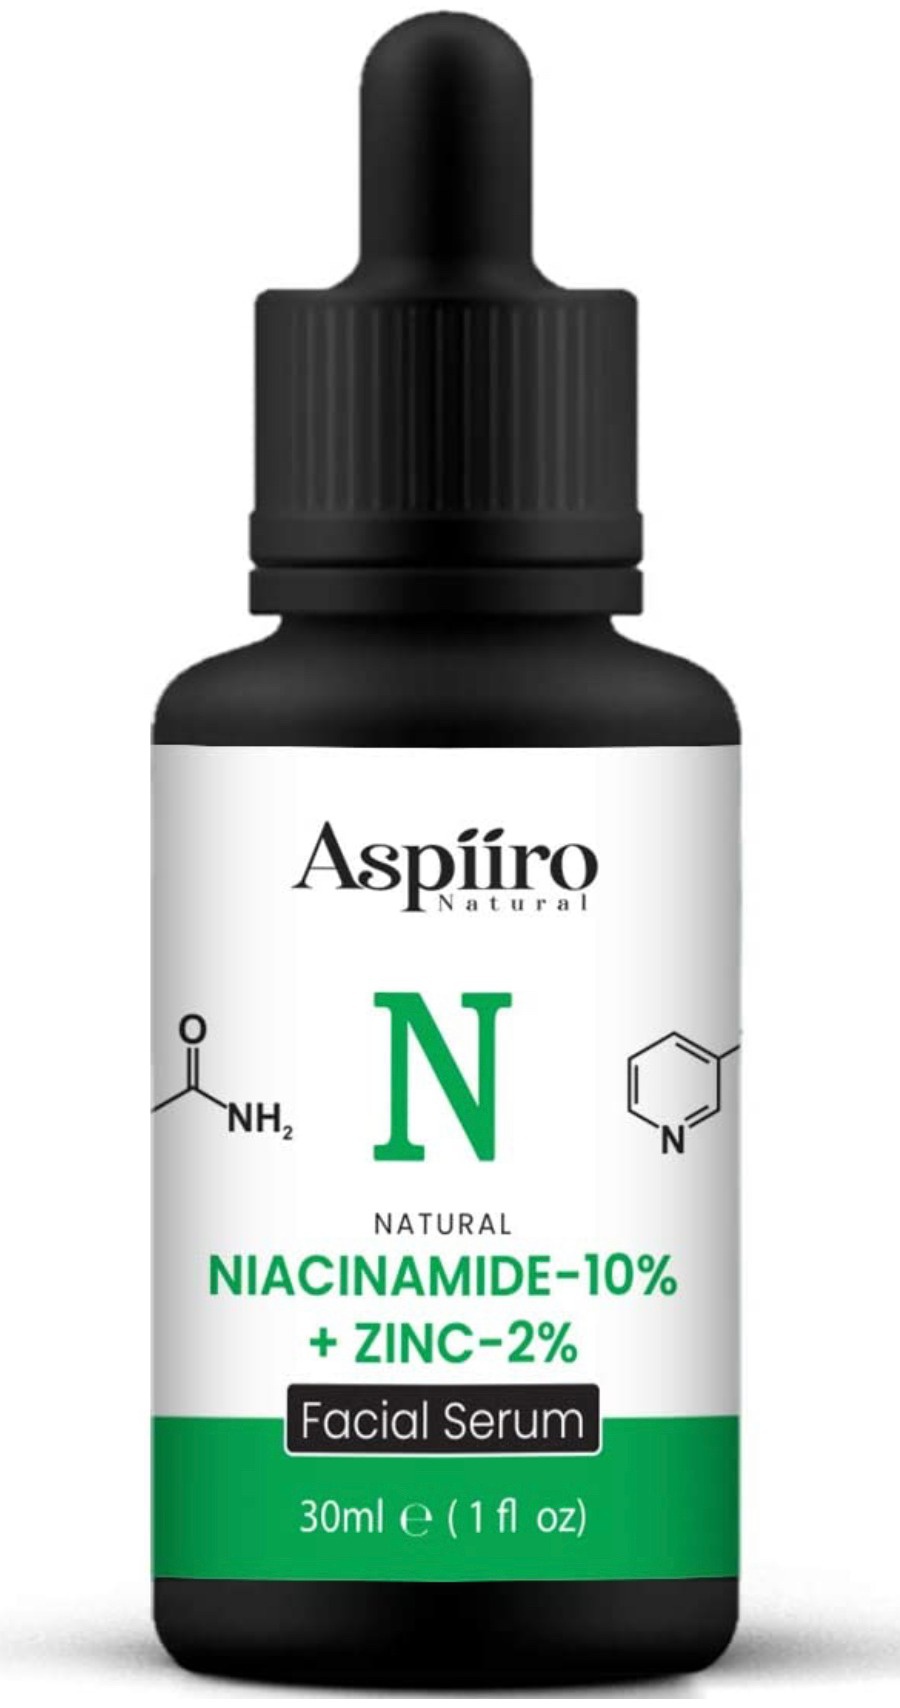 Aspiiro natural Niacinamide -10% with Zinc -2% Face Serum